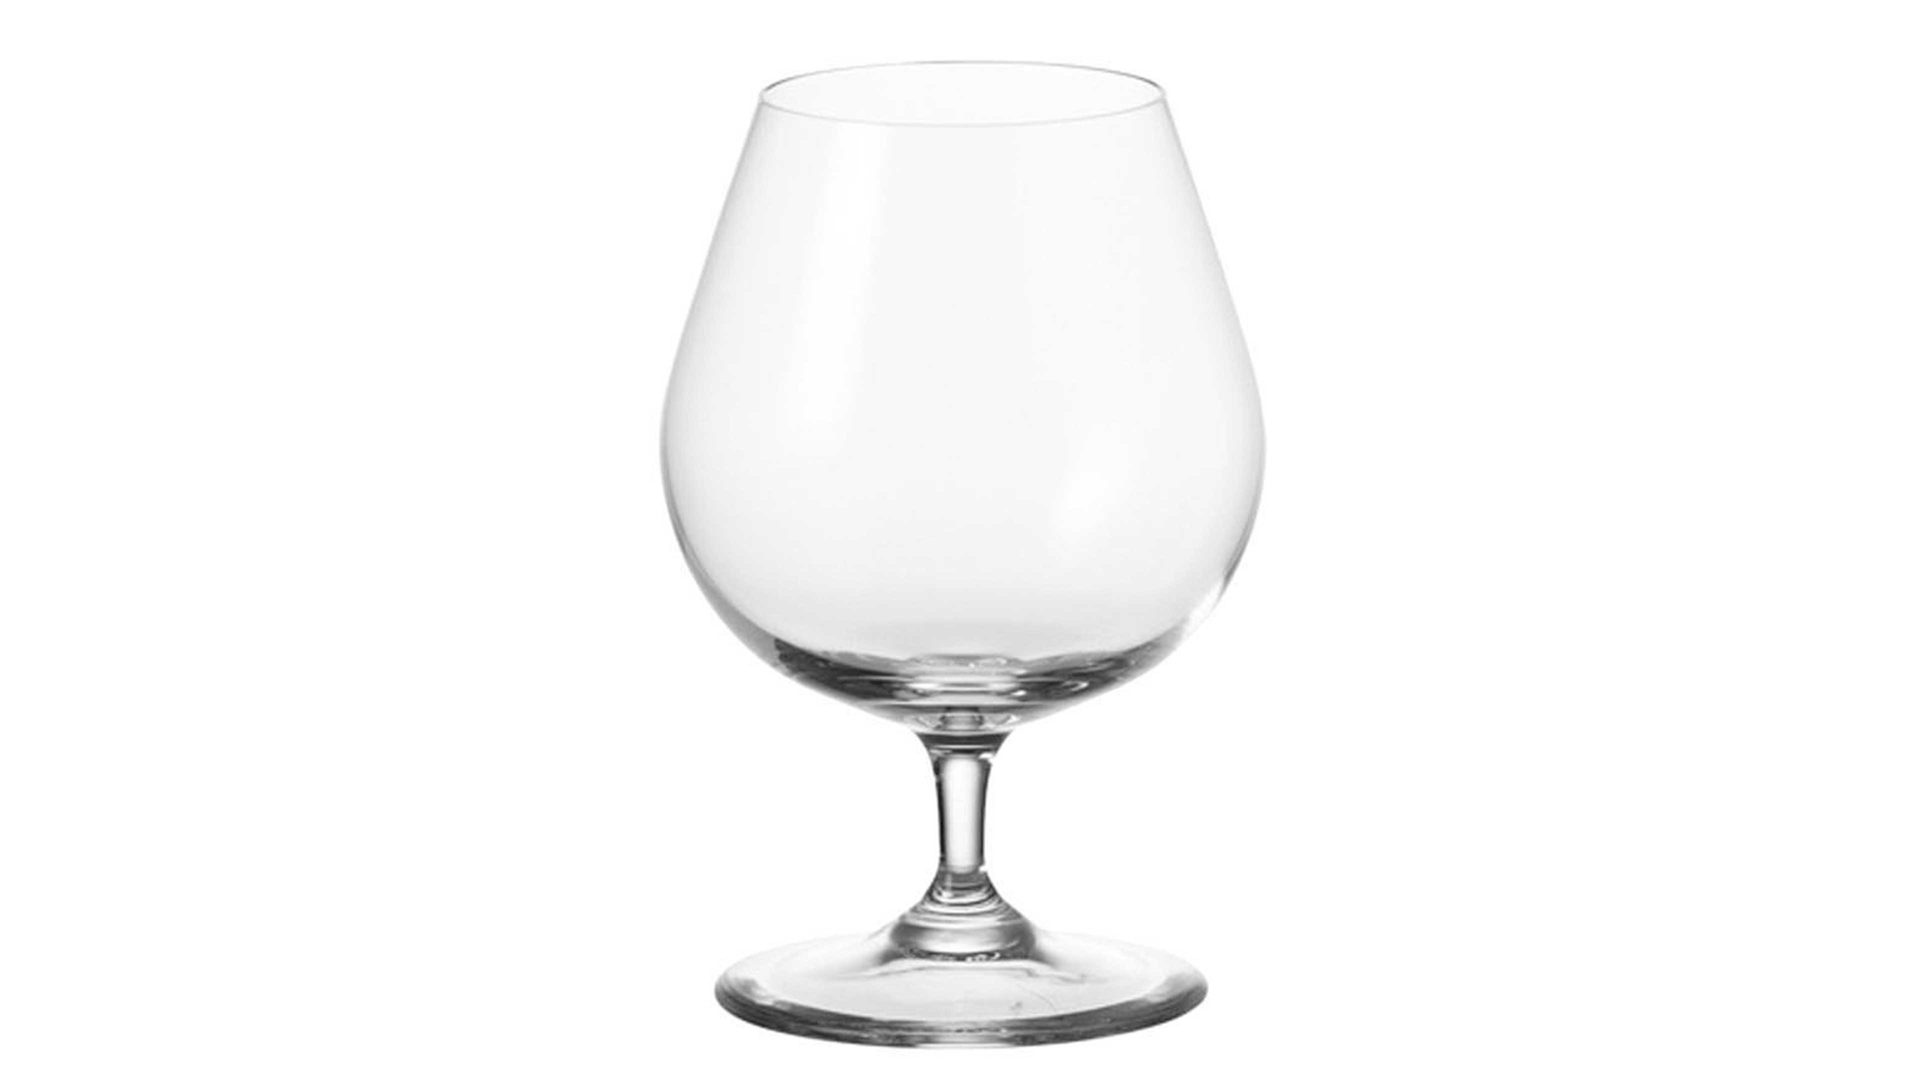 Cognacglas Leonardo | glaskoch aus Glas in Transparent LEONARDO Cognacschwenker Ciao+ TEQTON®-Klarglas - ca. 40 ml Nutzinhalt